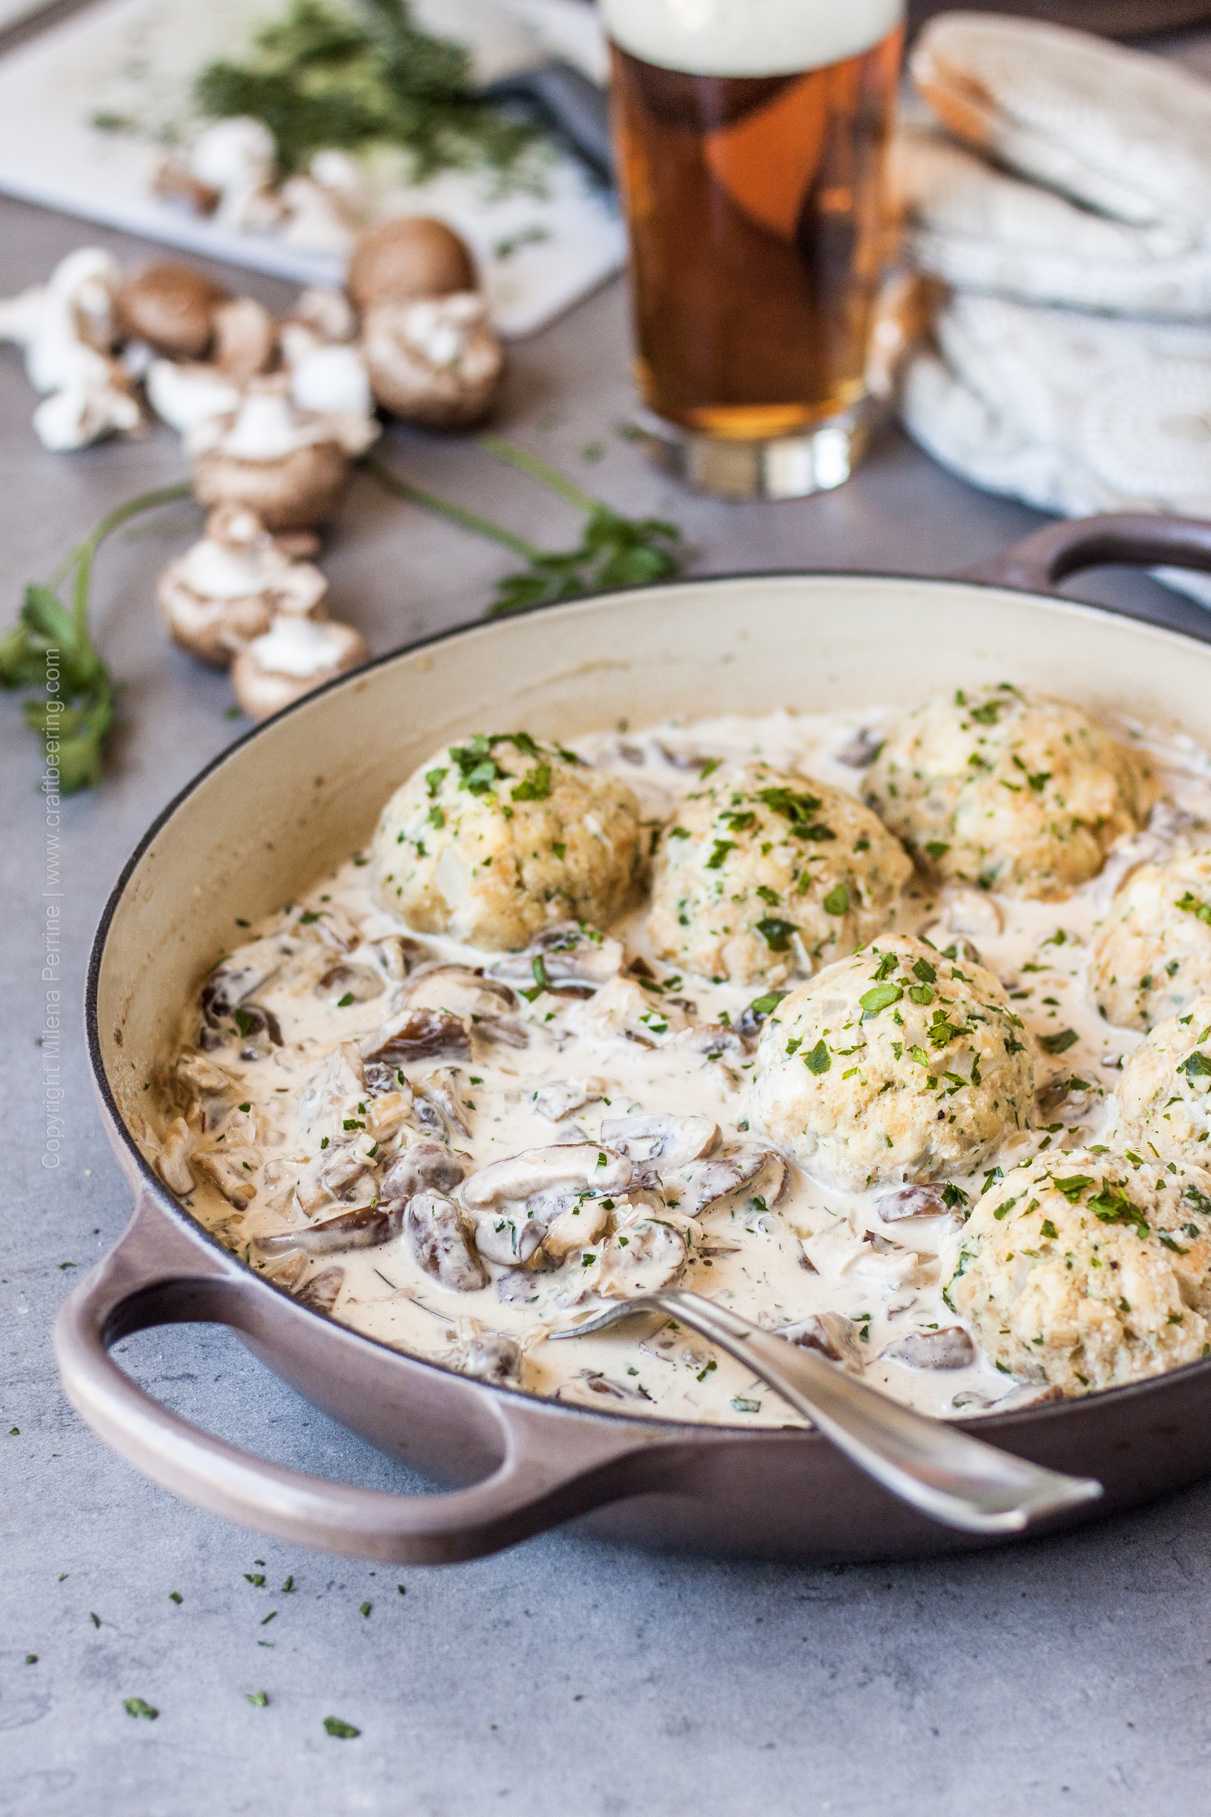 Creamy Bavarian mushroom stew with bread dumplings. 